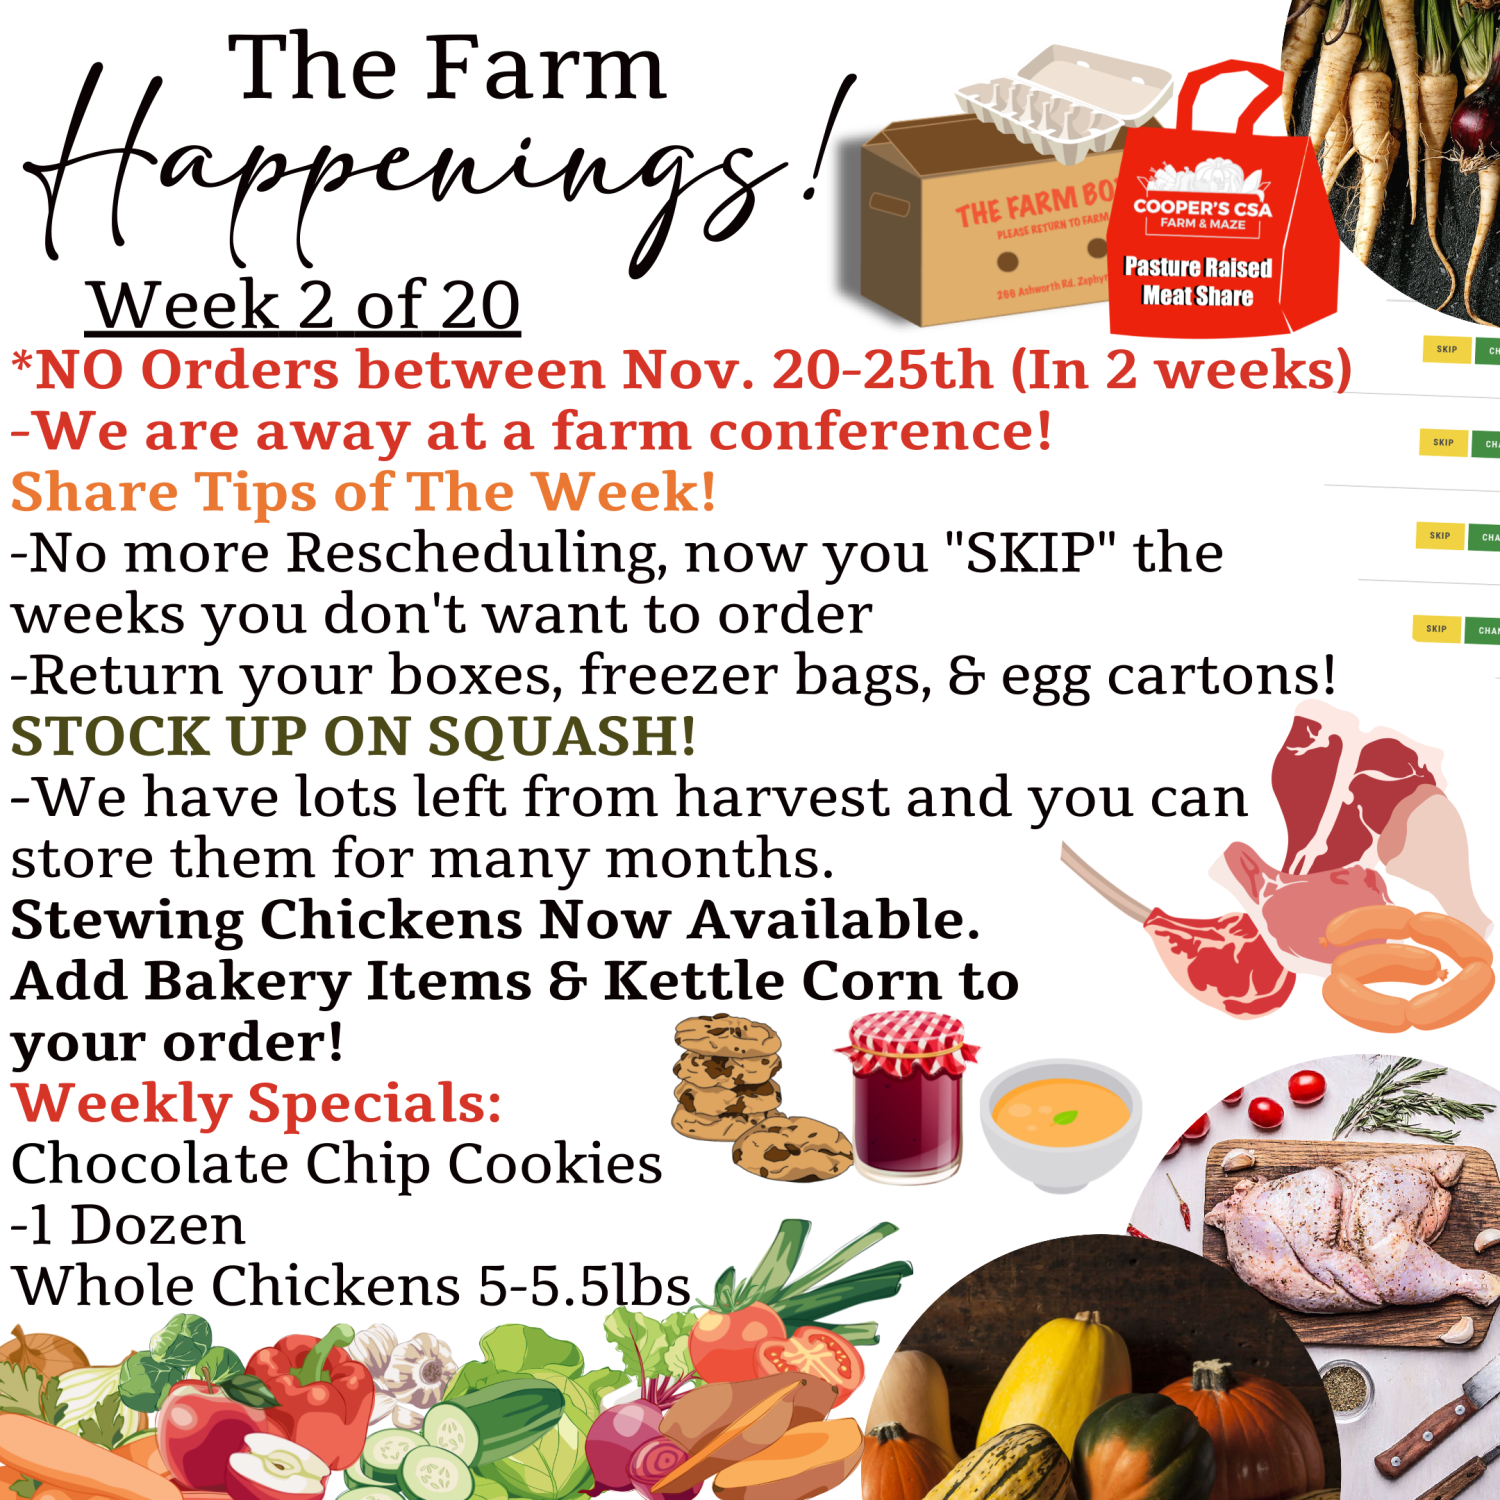 Previous Happening: "The Farm Box"-Coopers CSA Farm Farm Happenings Nov 14-18